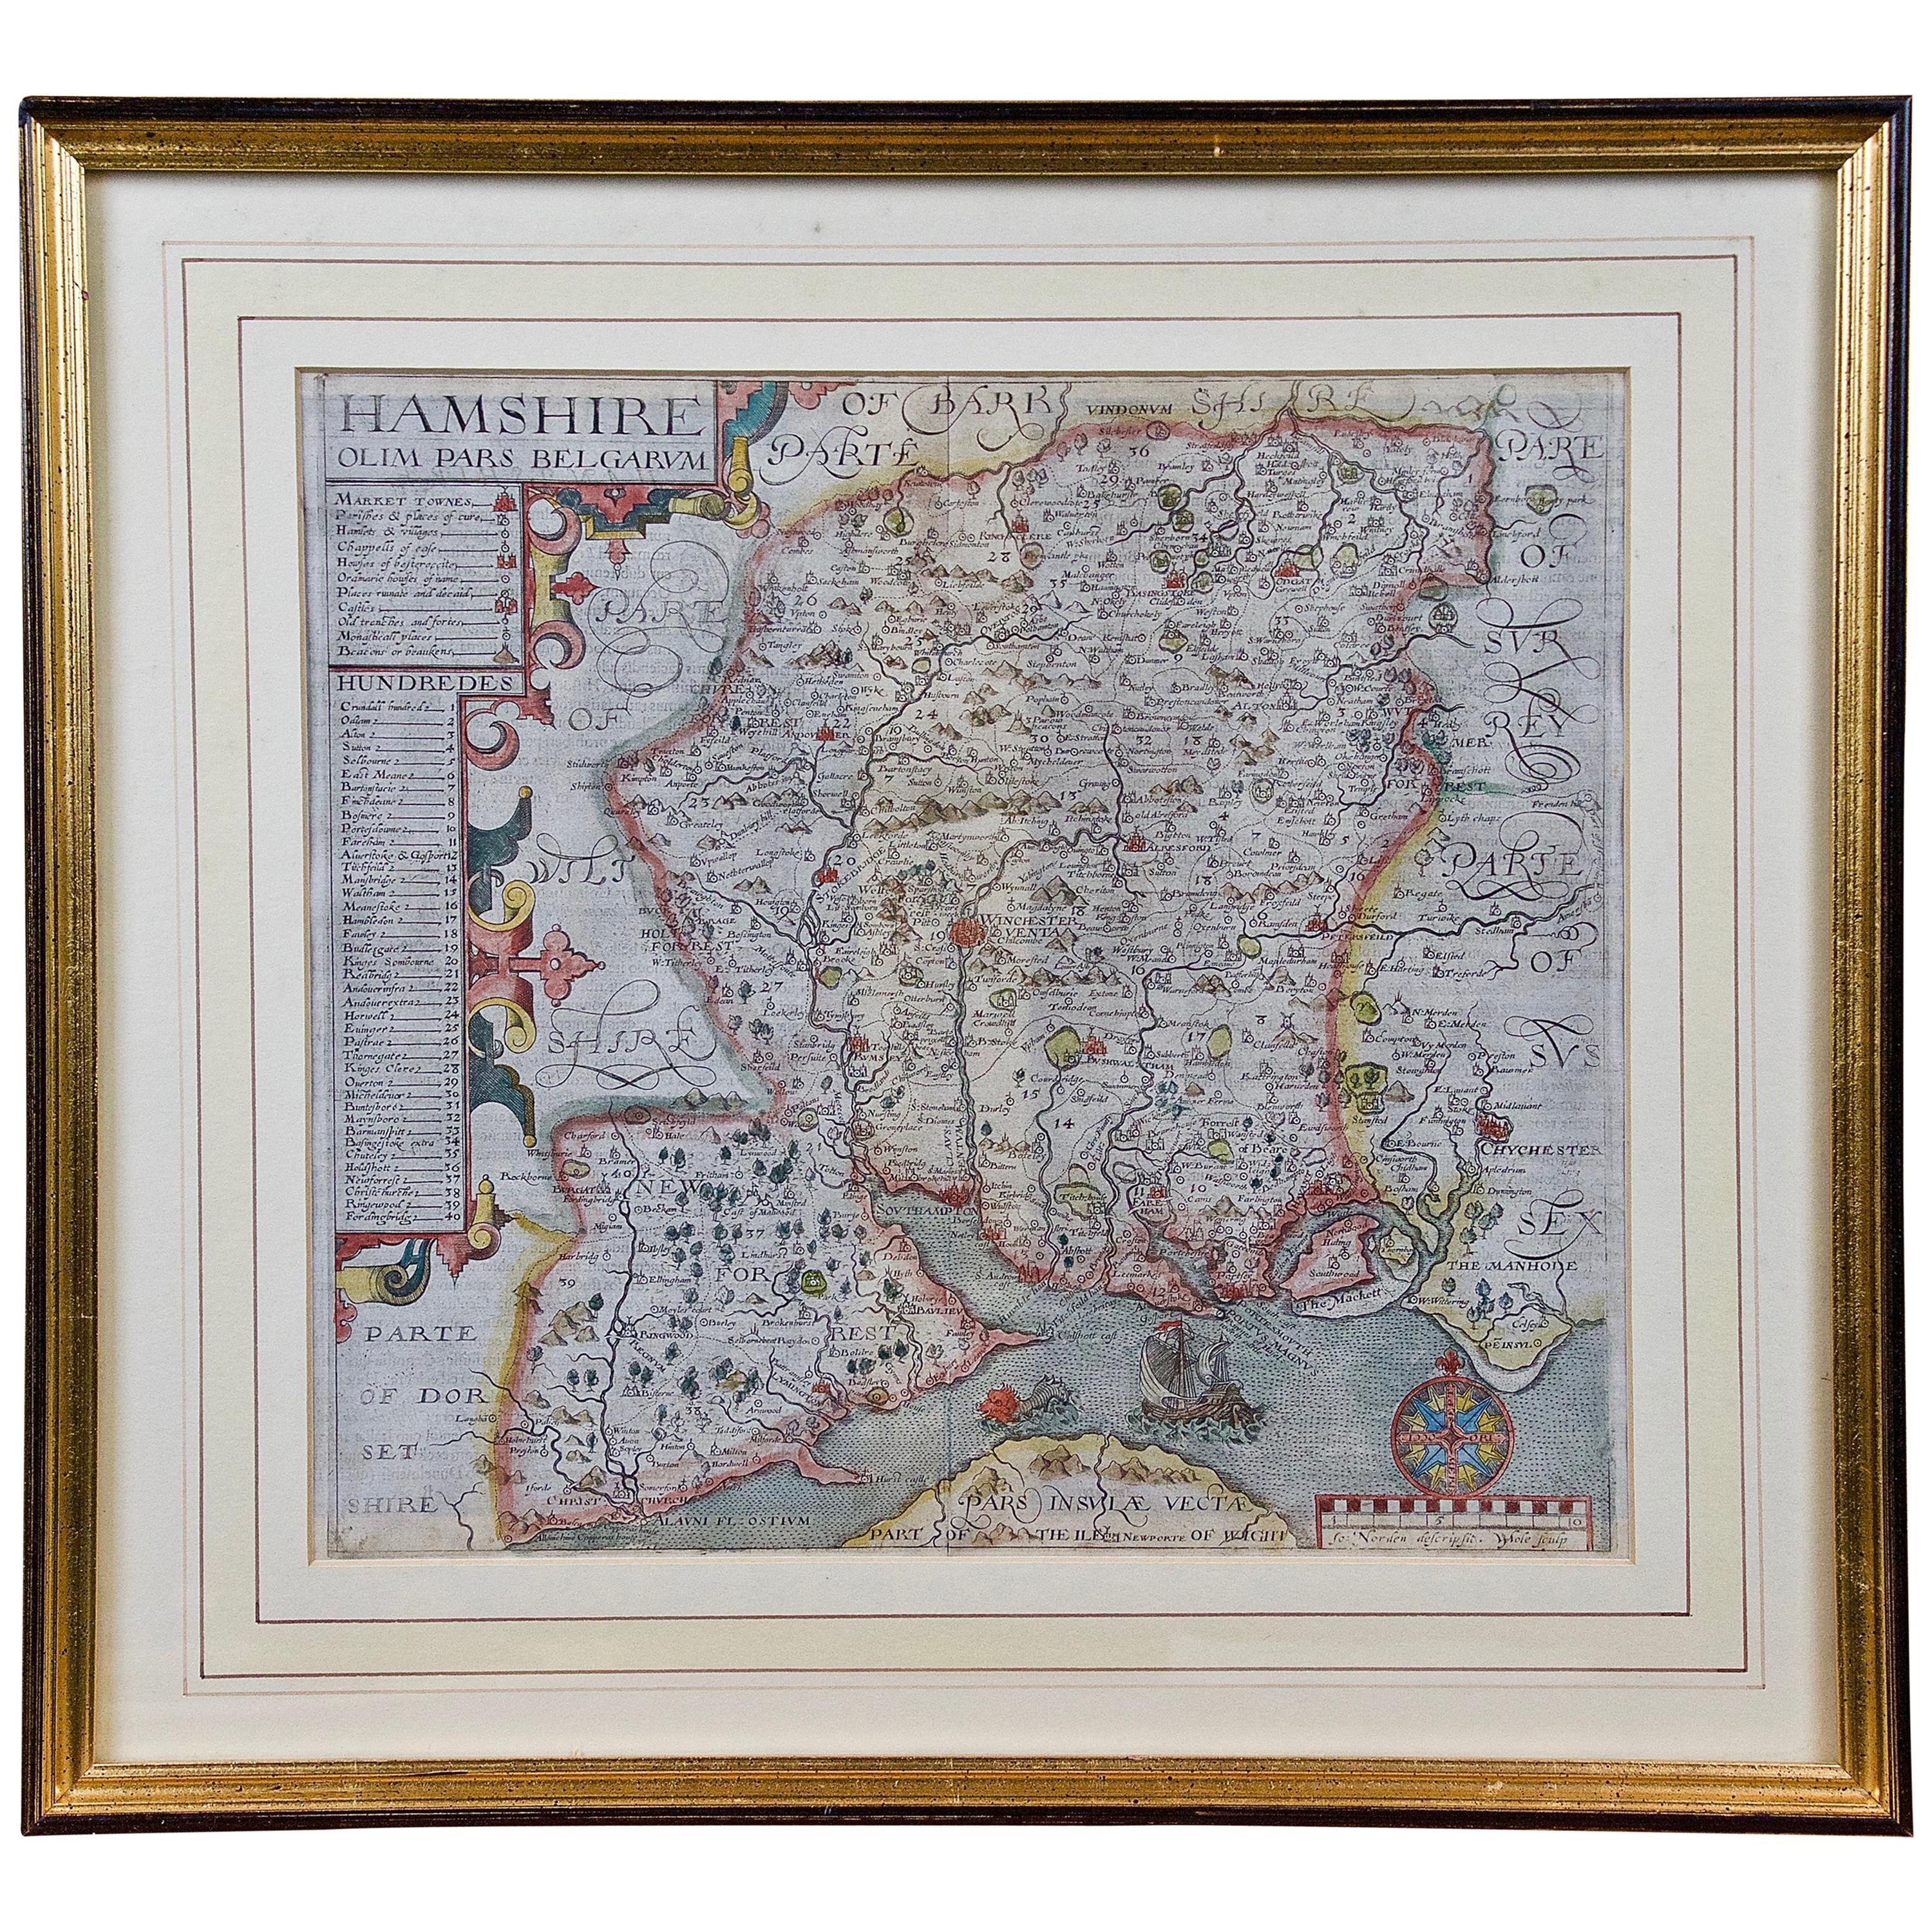 Hampshire County, Britain/England: A Map from Camden's" Britannia" in 1607